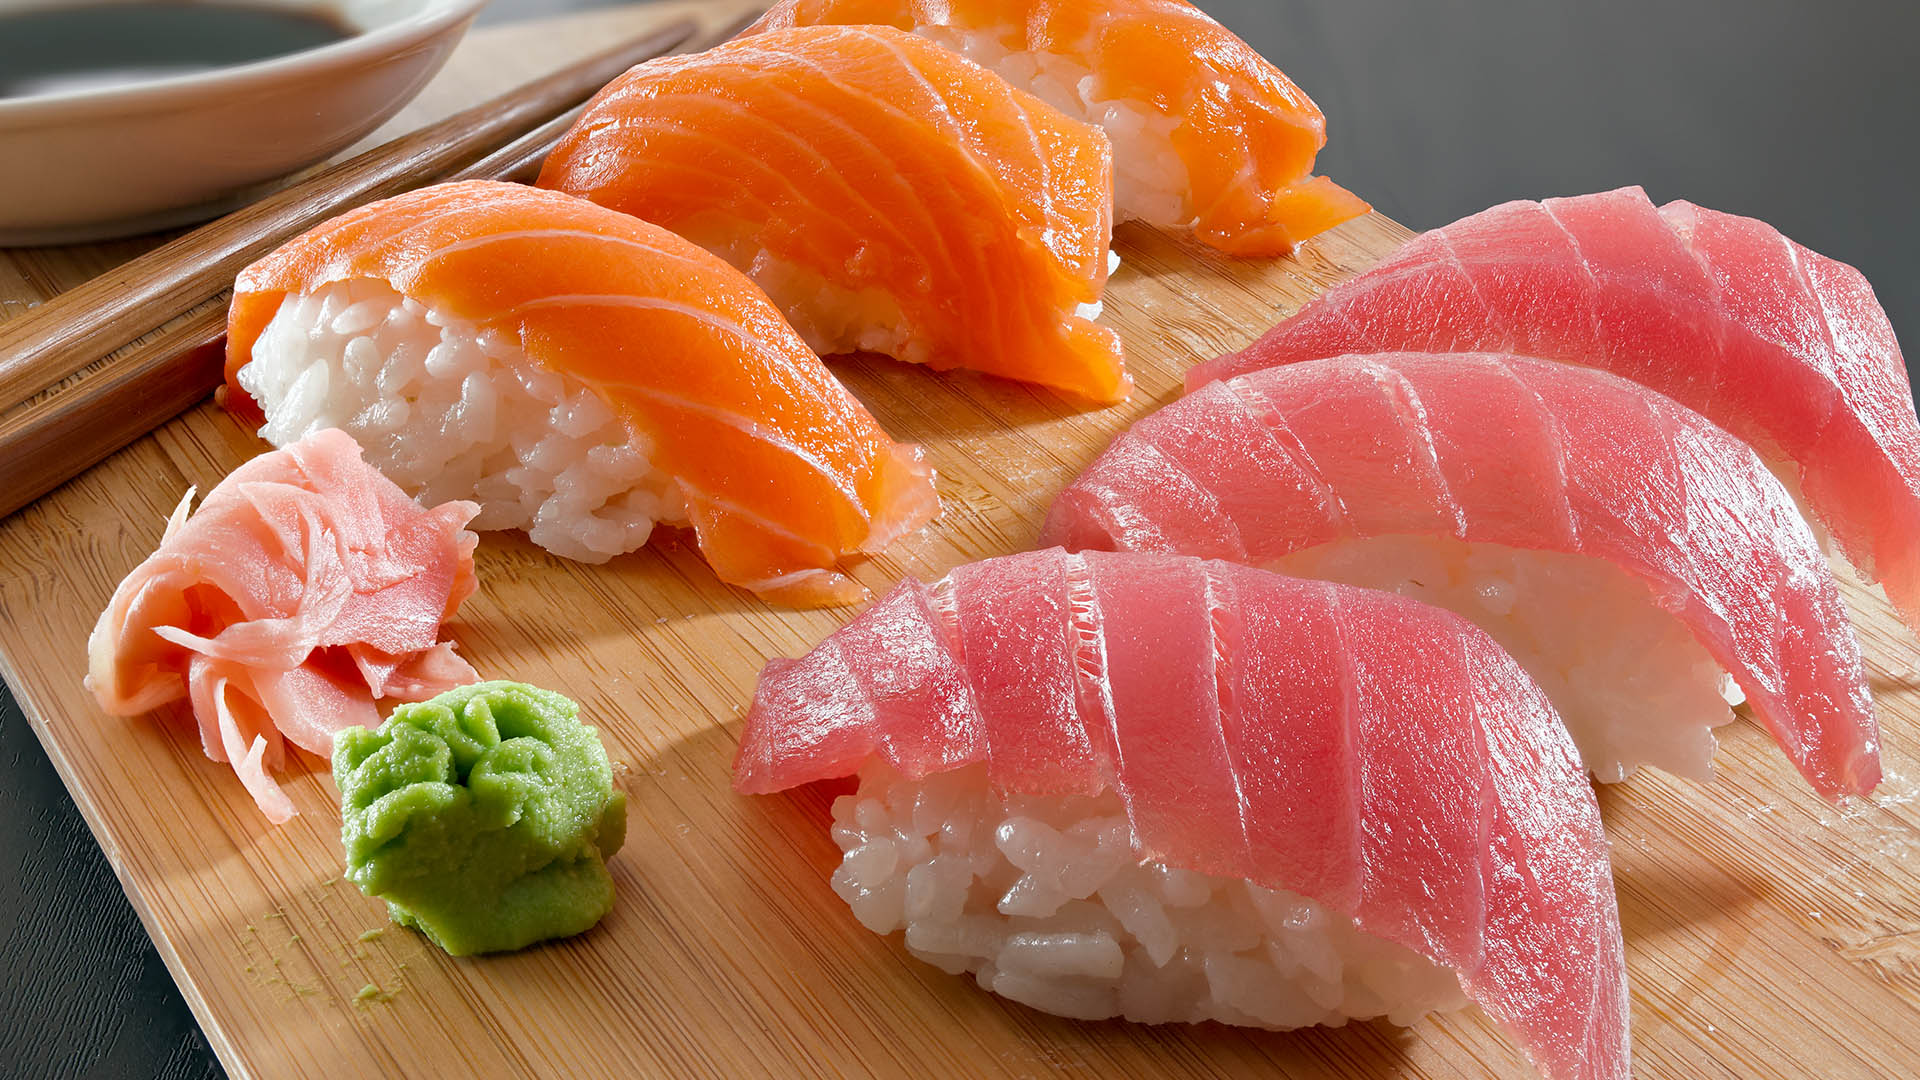 Sushi - Salmon and tuna